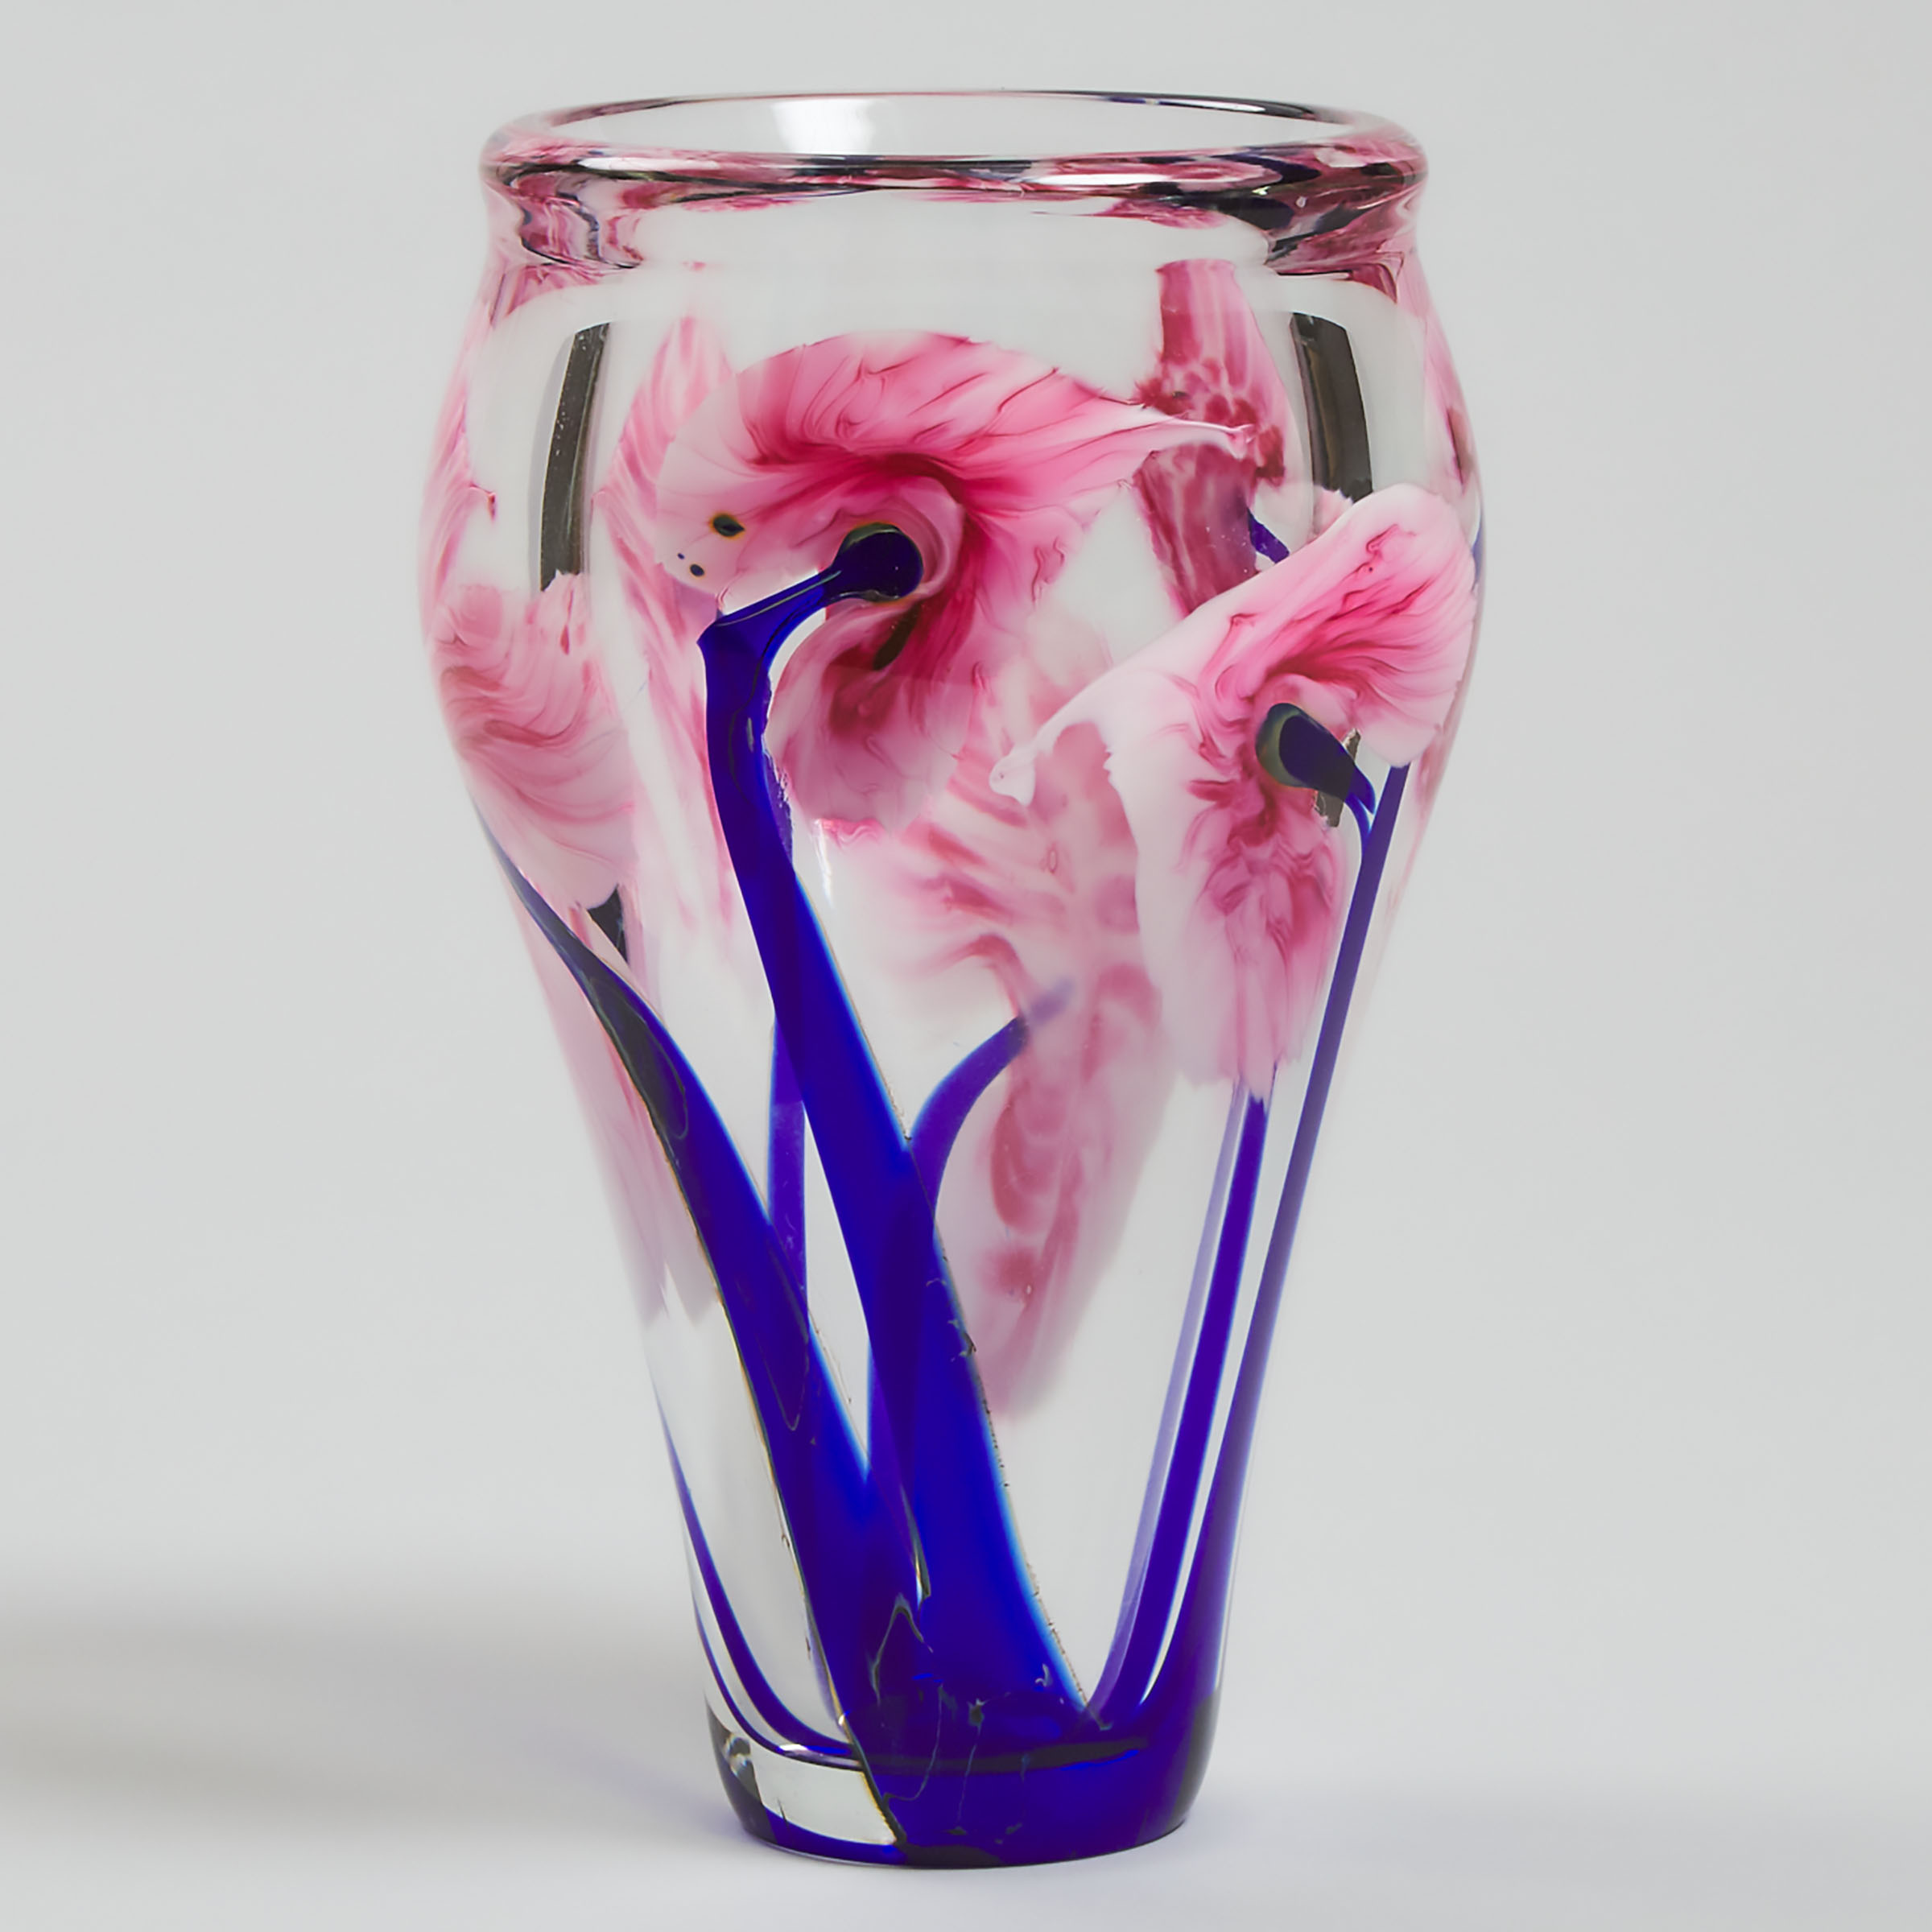 John Lotton (American, b.1964), Paperweight Glass Vase, 1996